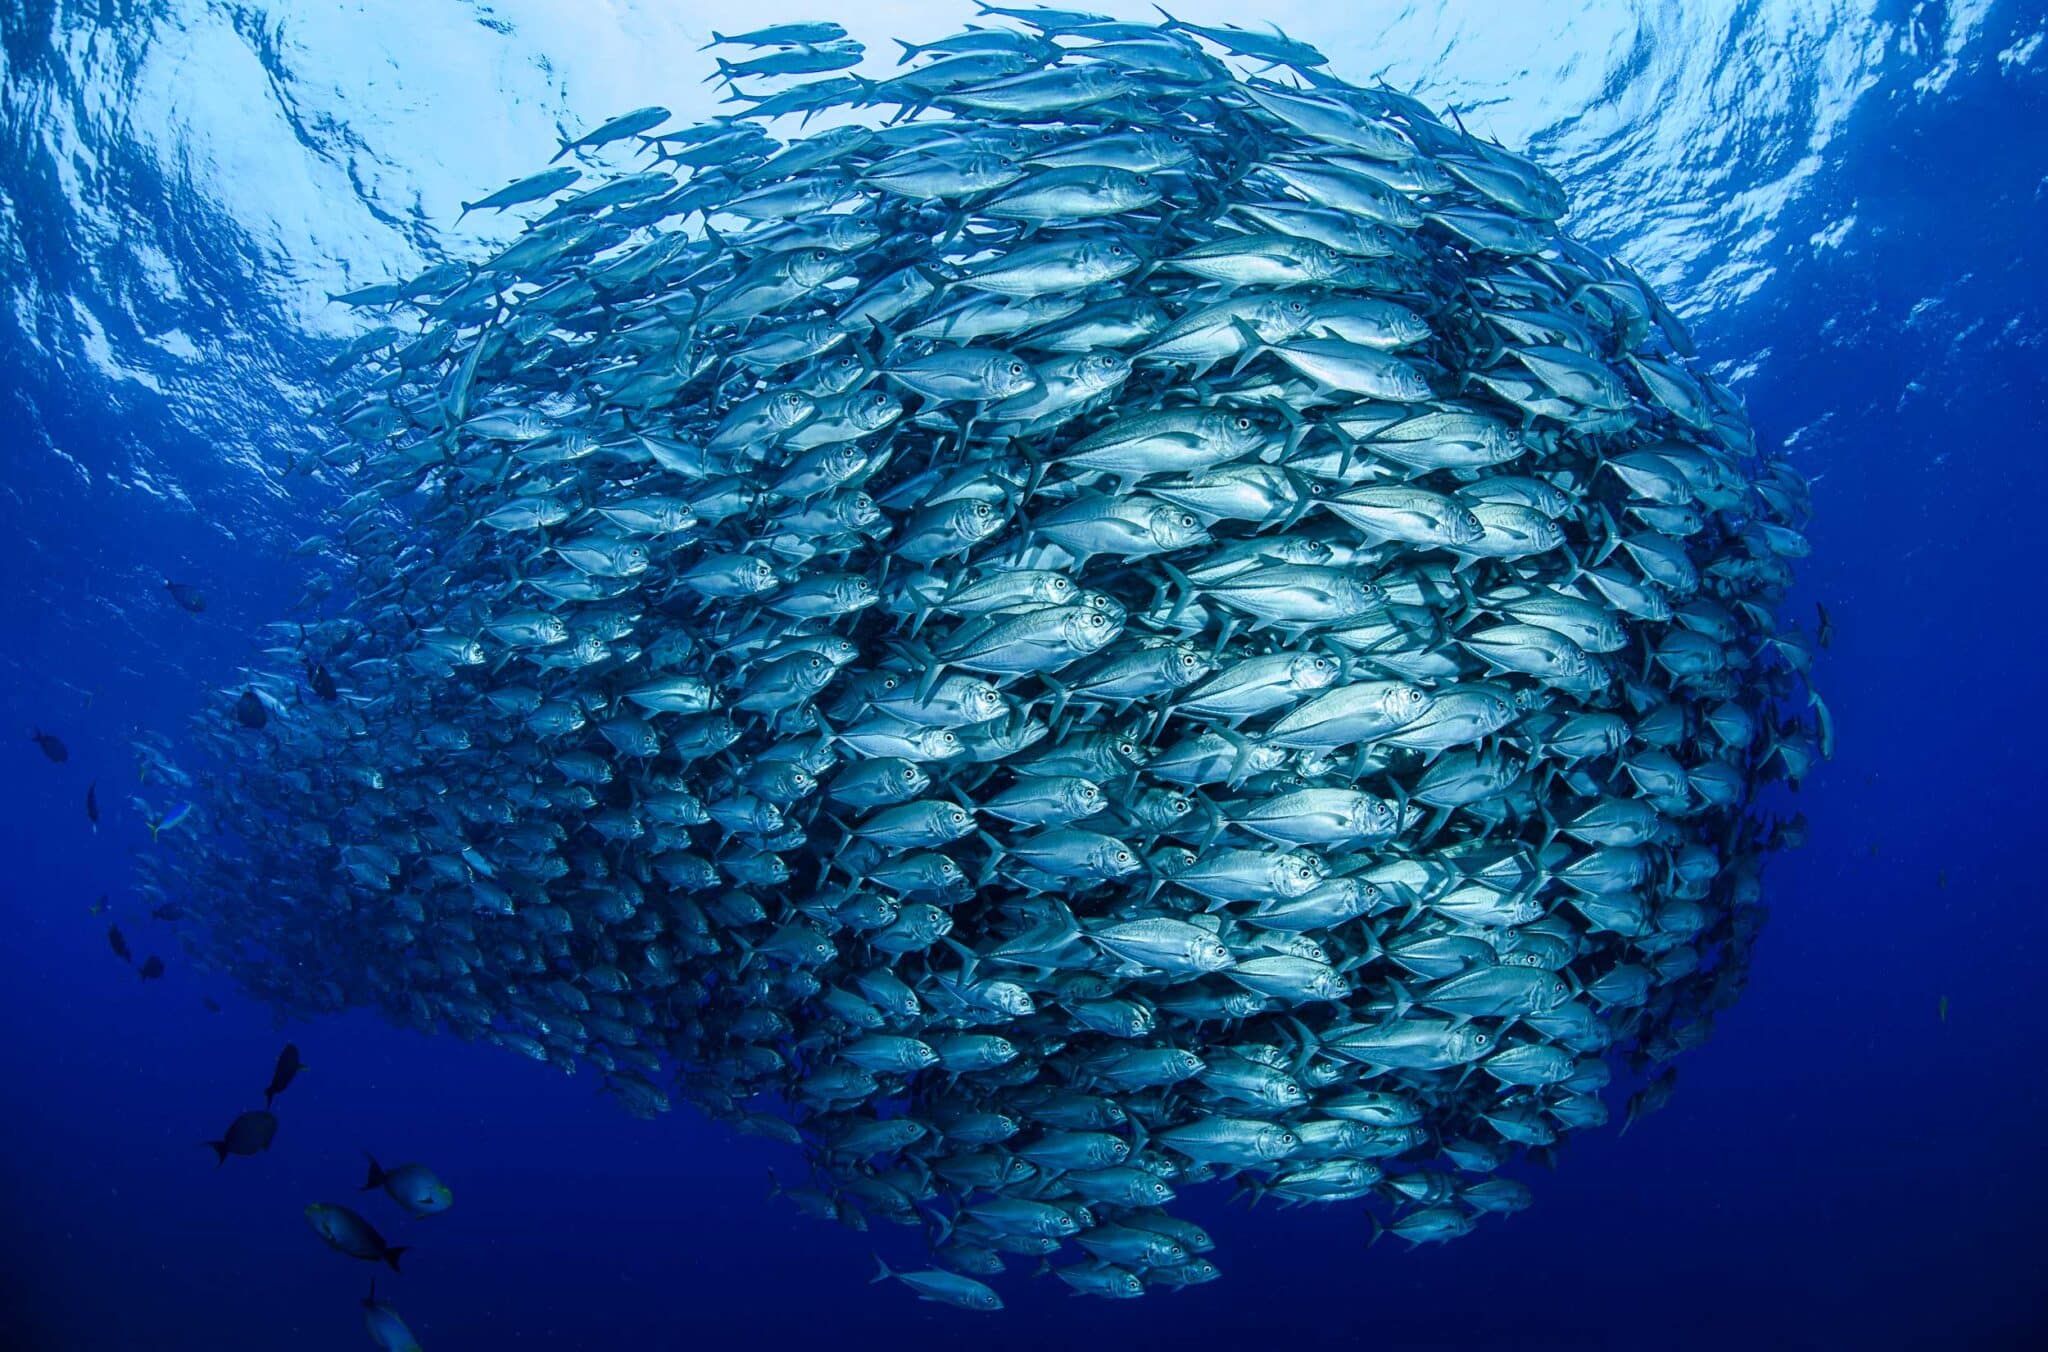 Fischschwarm im blauen Meer